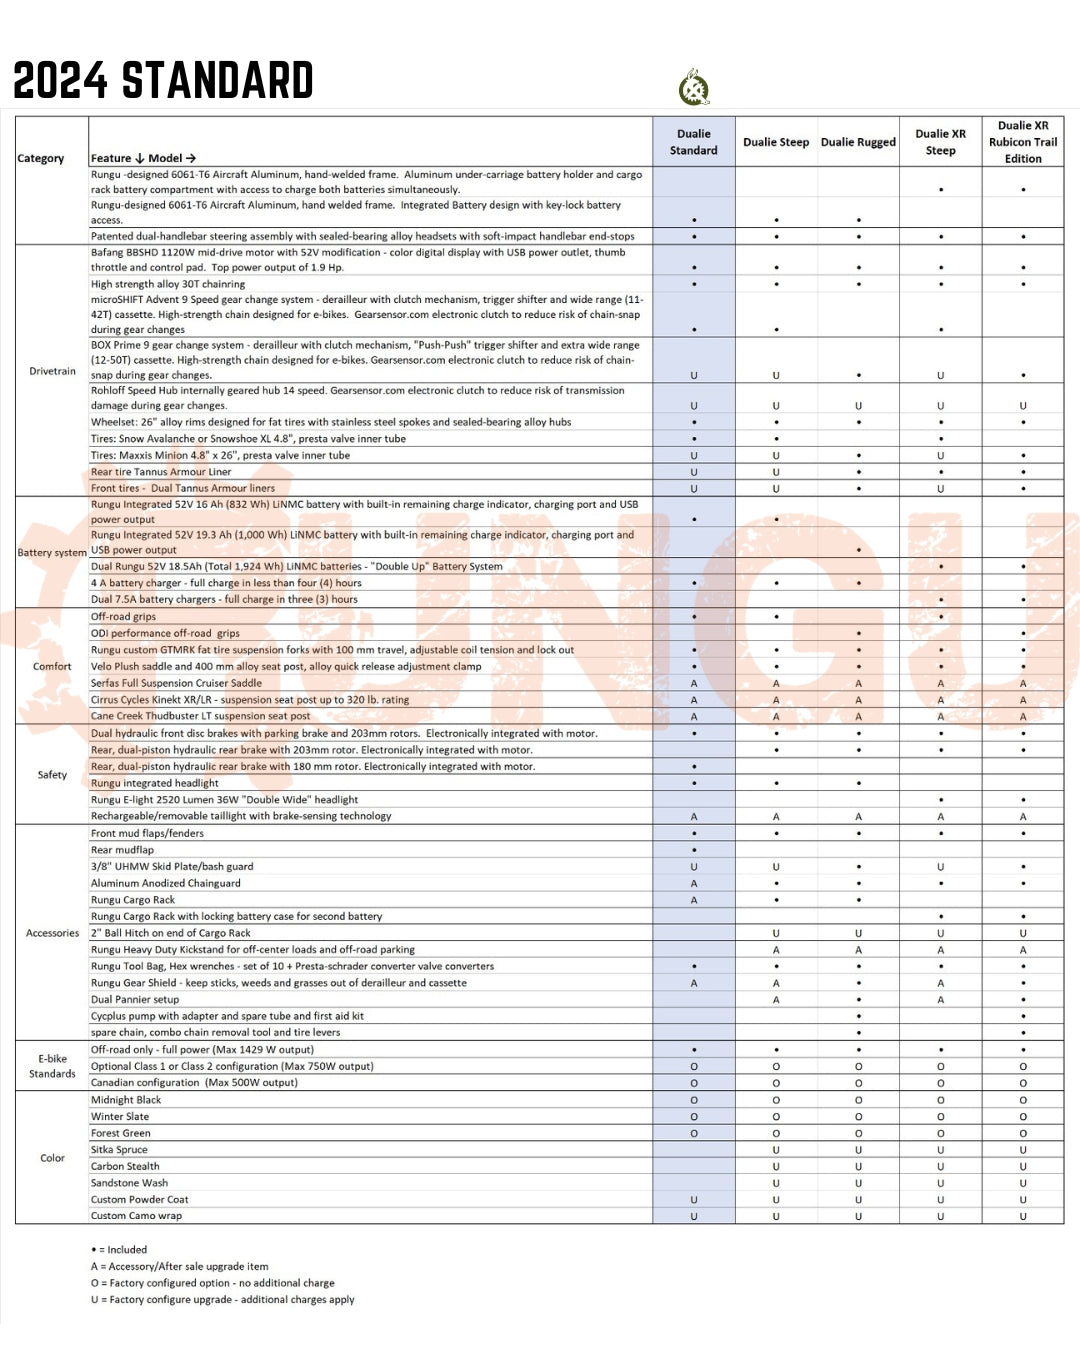 Rungu Dualie Standard Specifications